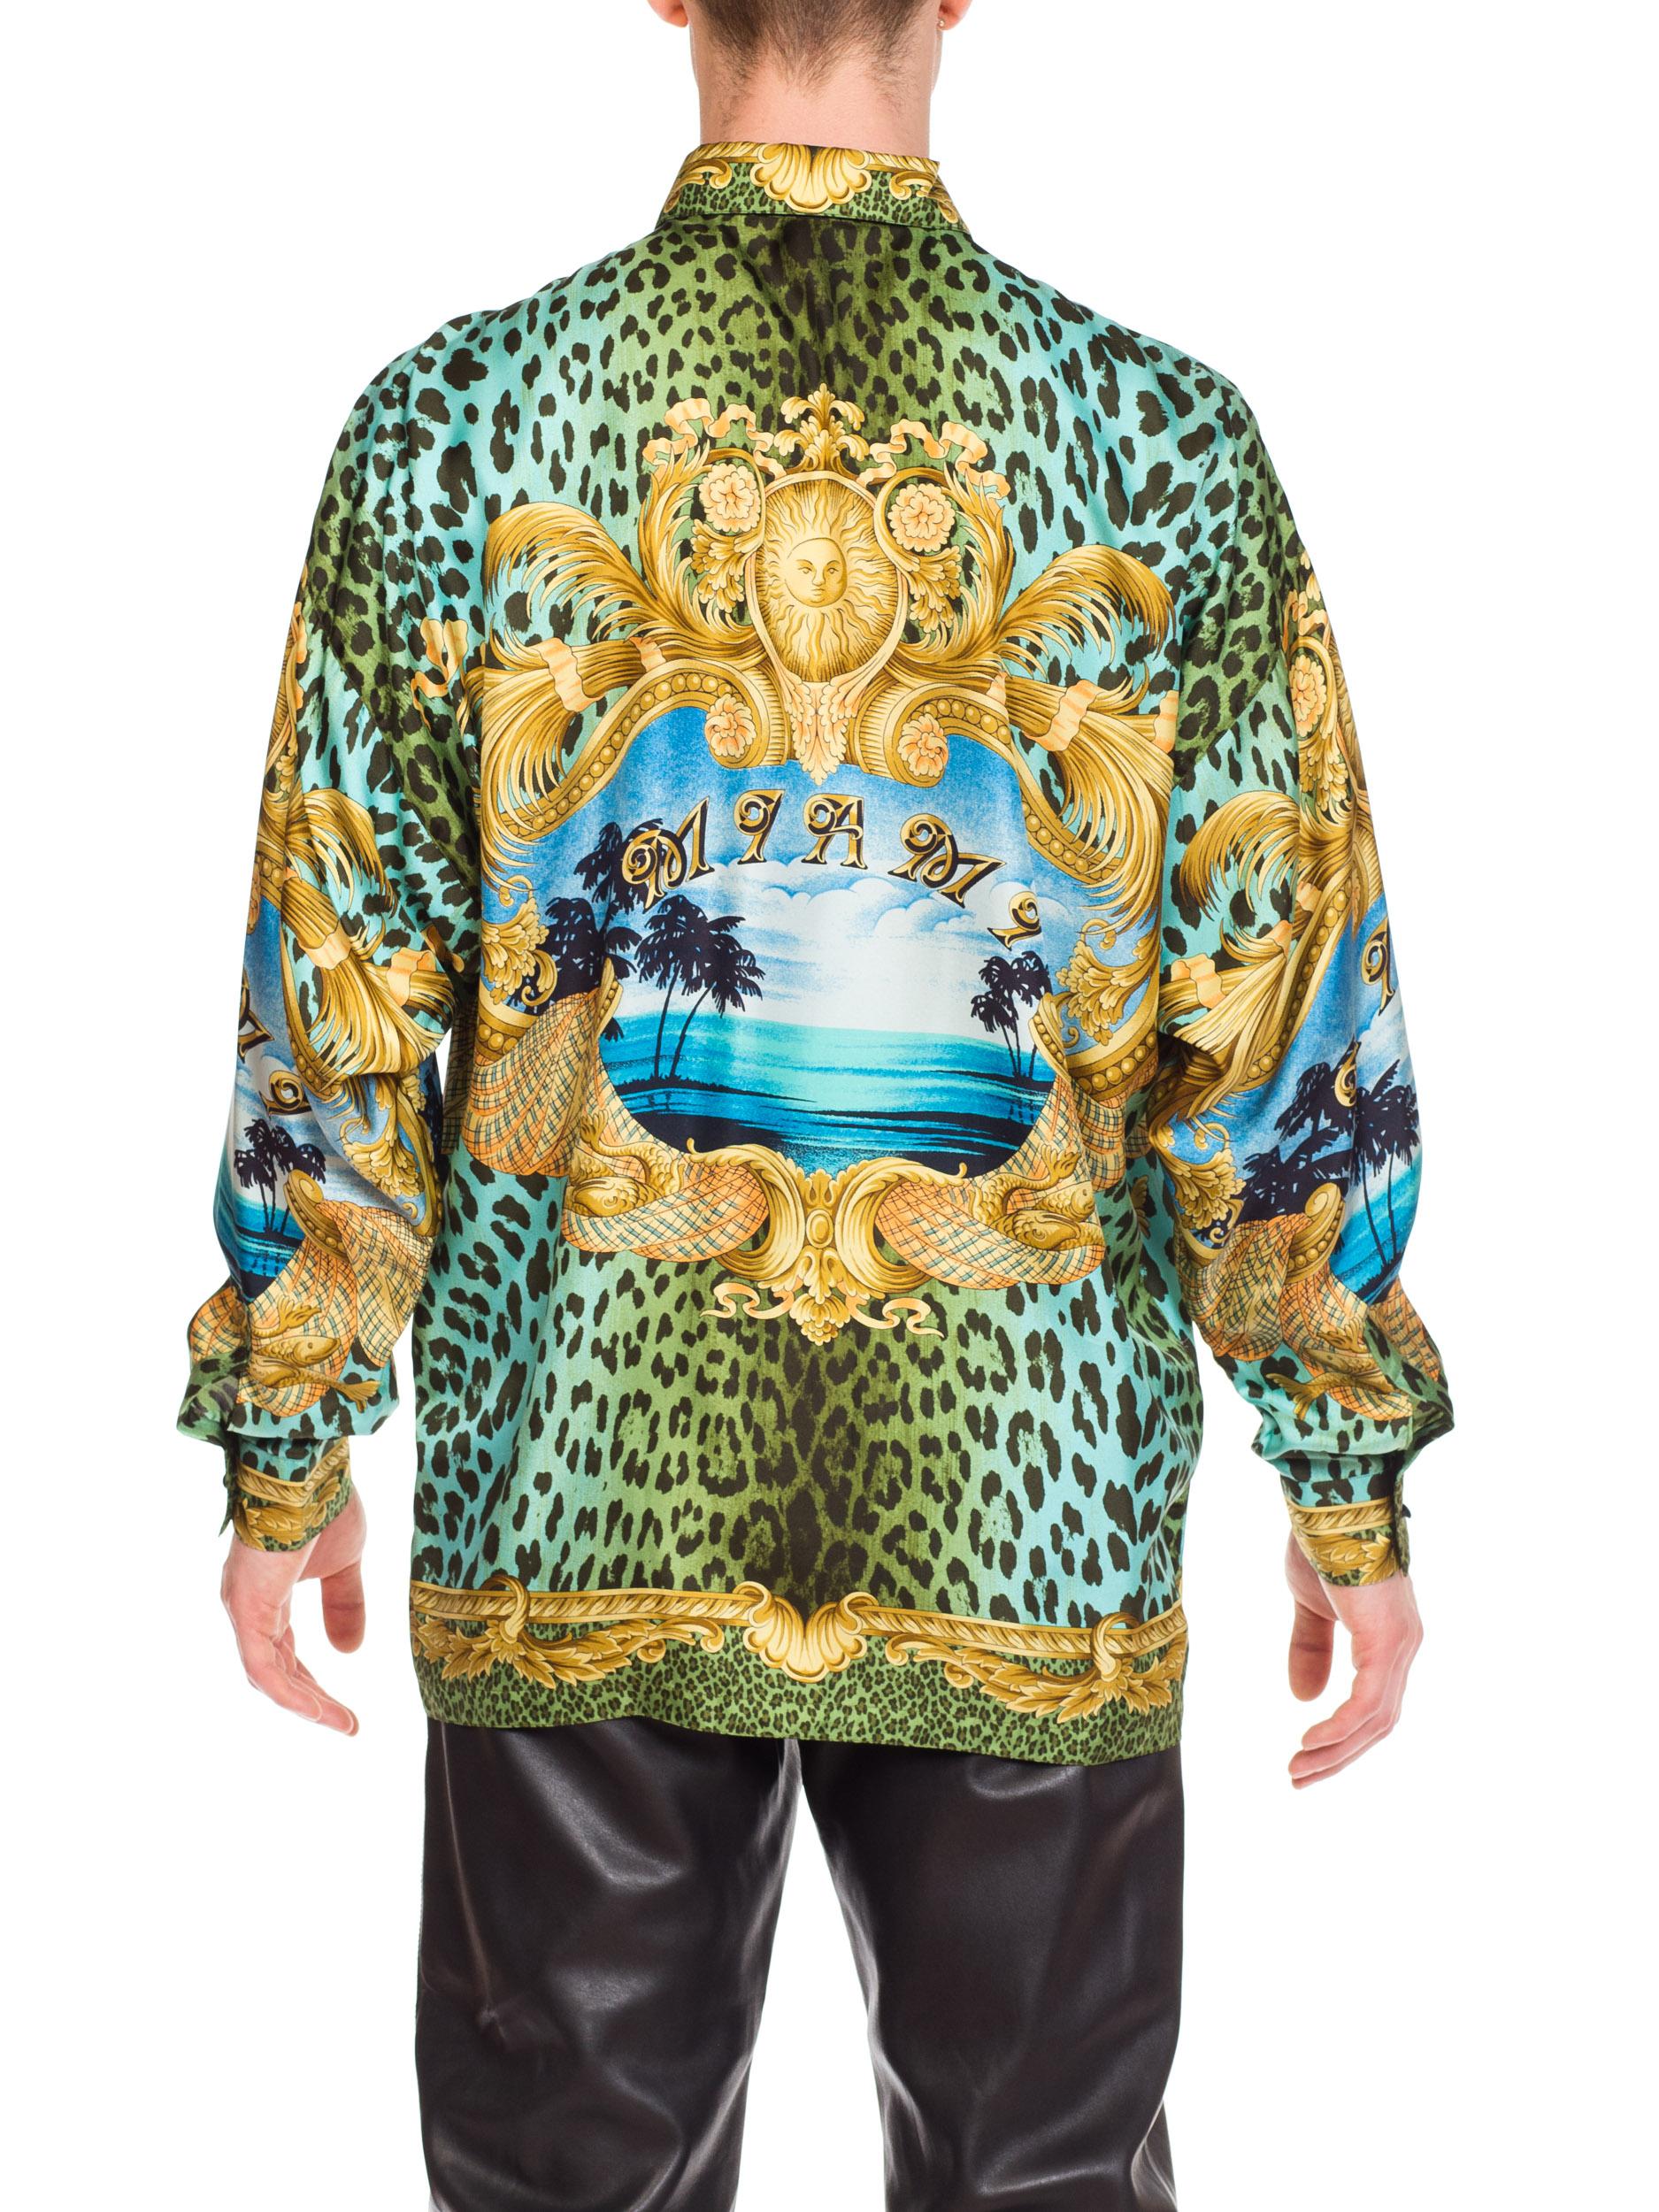 Gianni Versace Miami Leopard Baroque Silk Shirt, 1990s  2